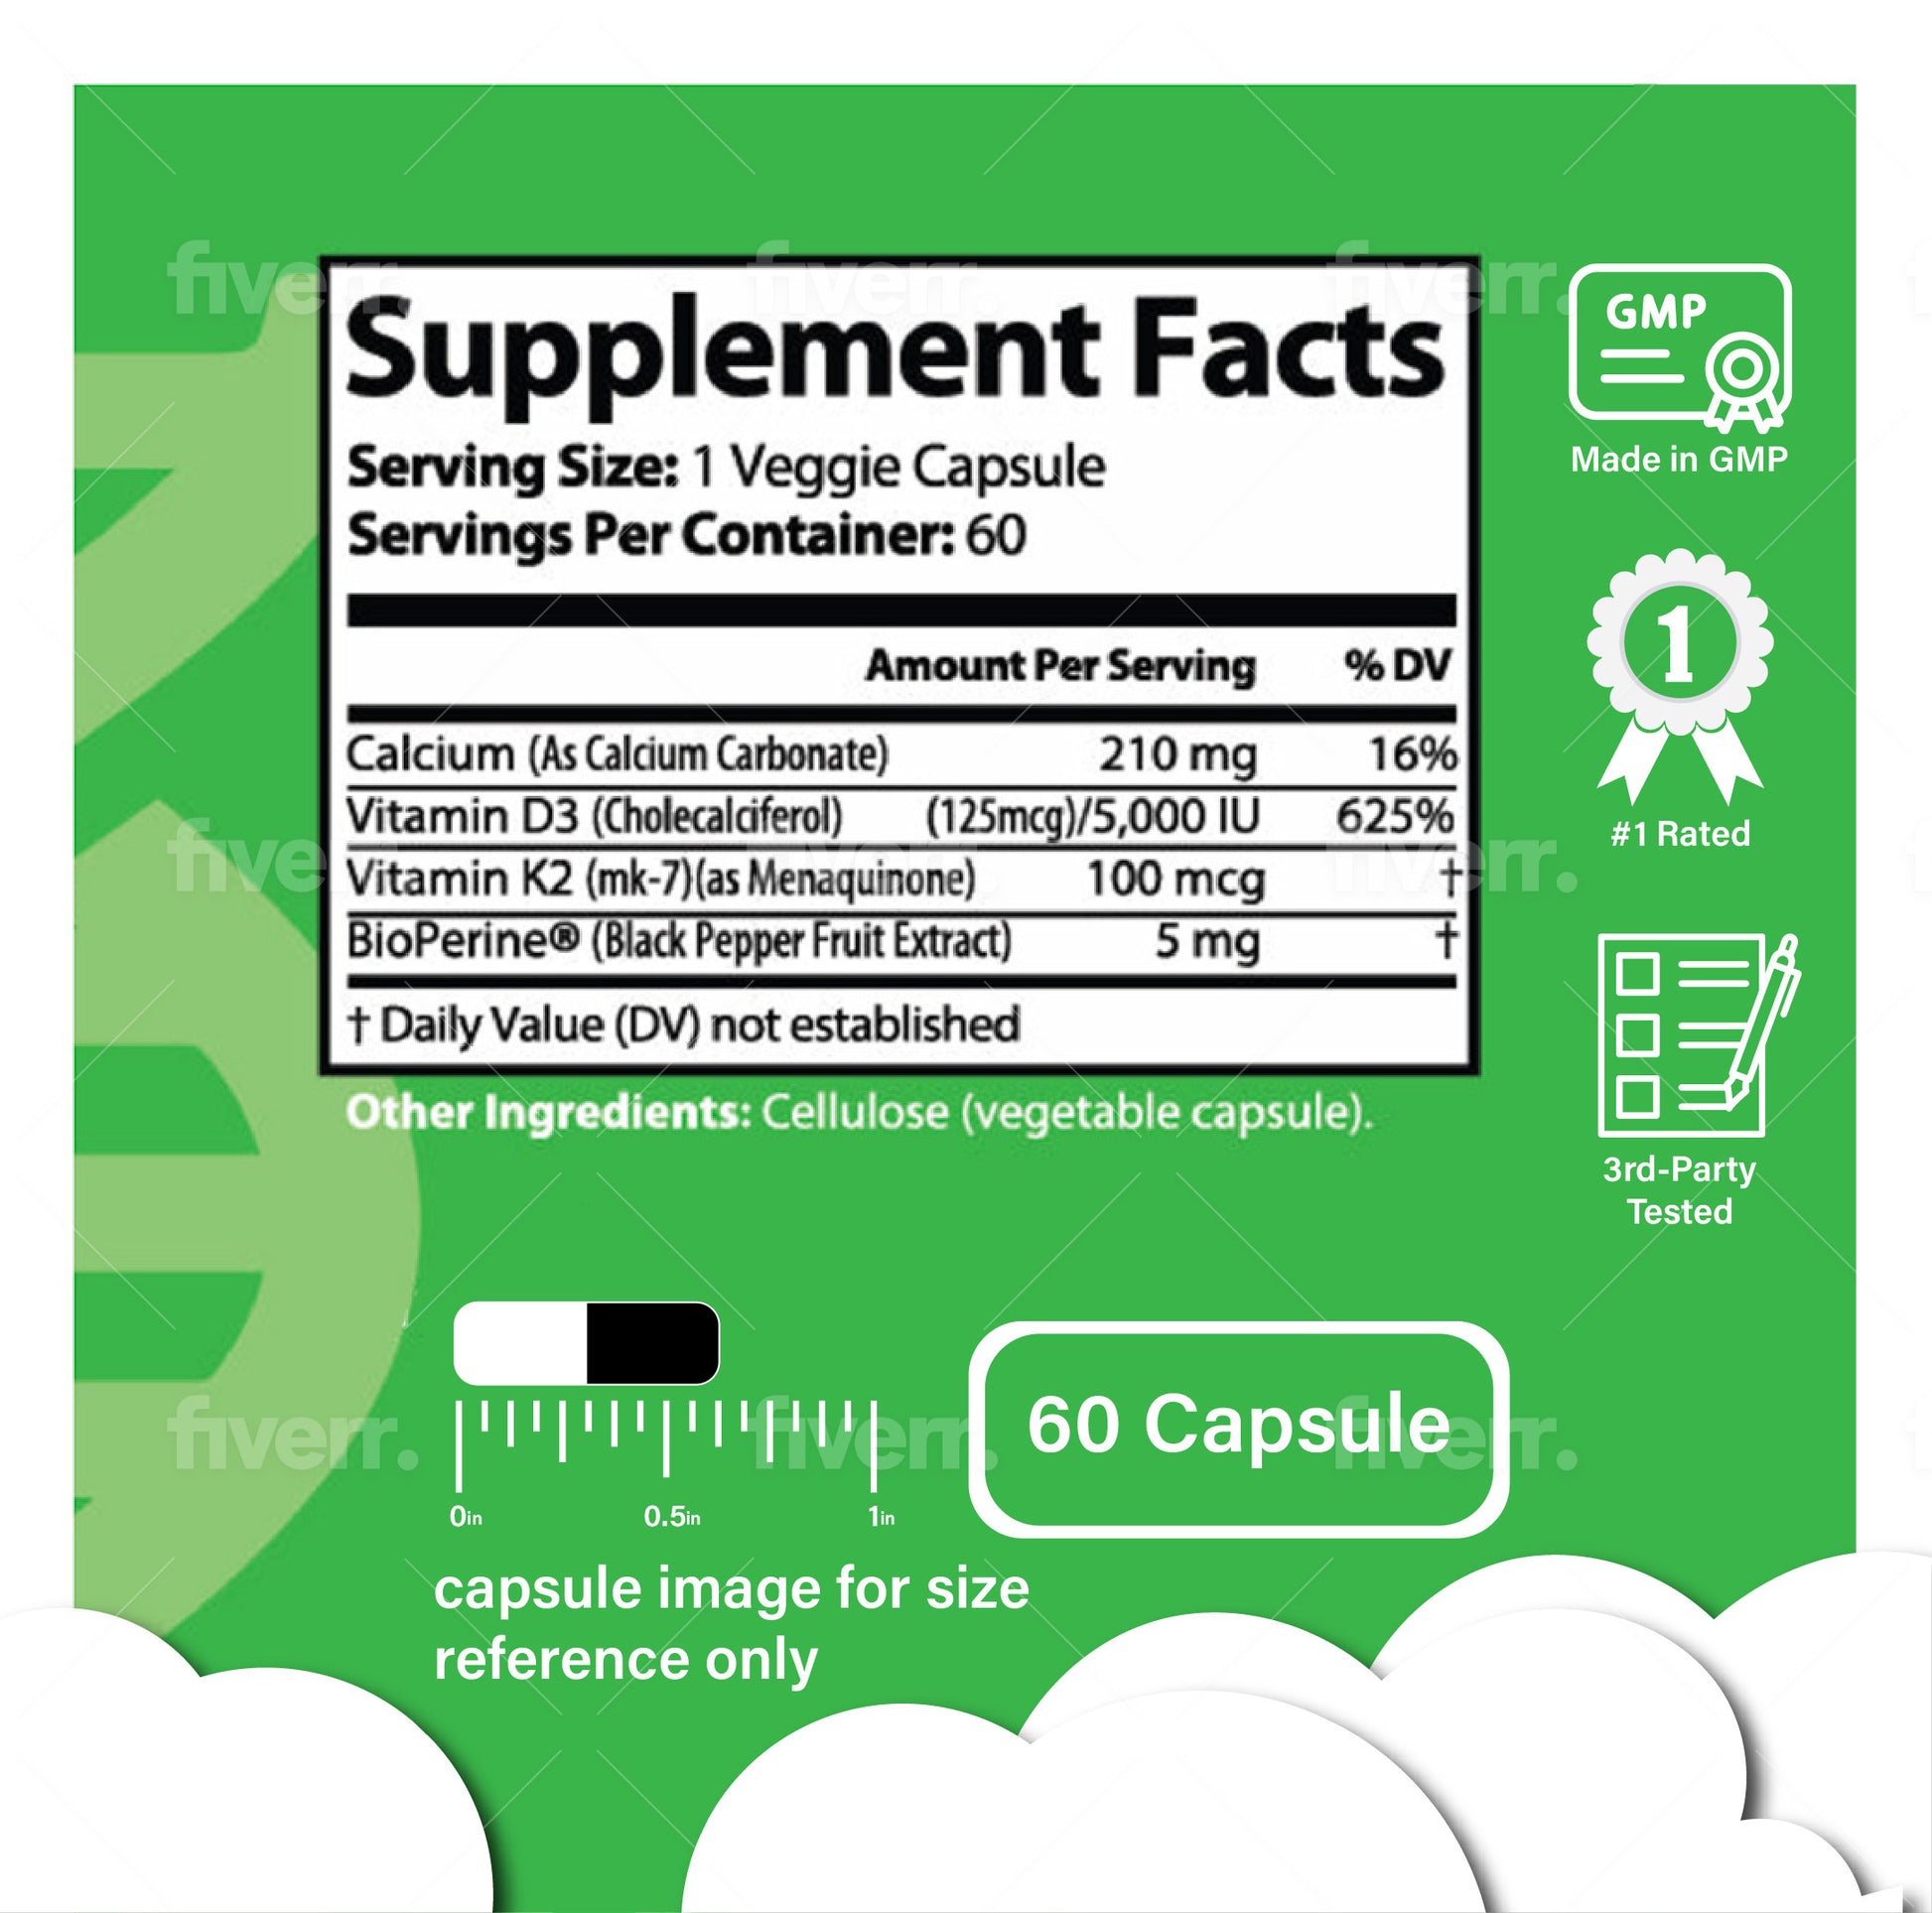 Vitamin D3+K2 (Capsules 2500iu-120 servings) - lookingvibrantcom